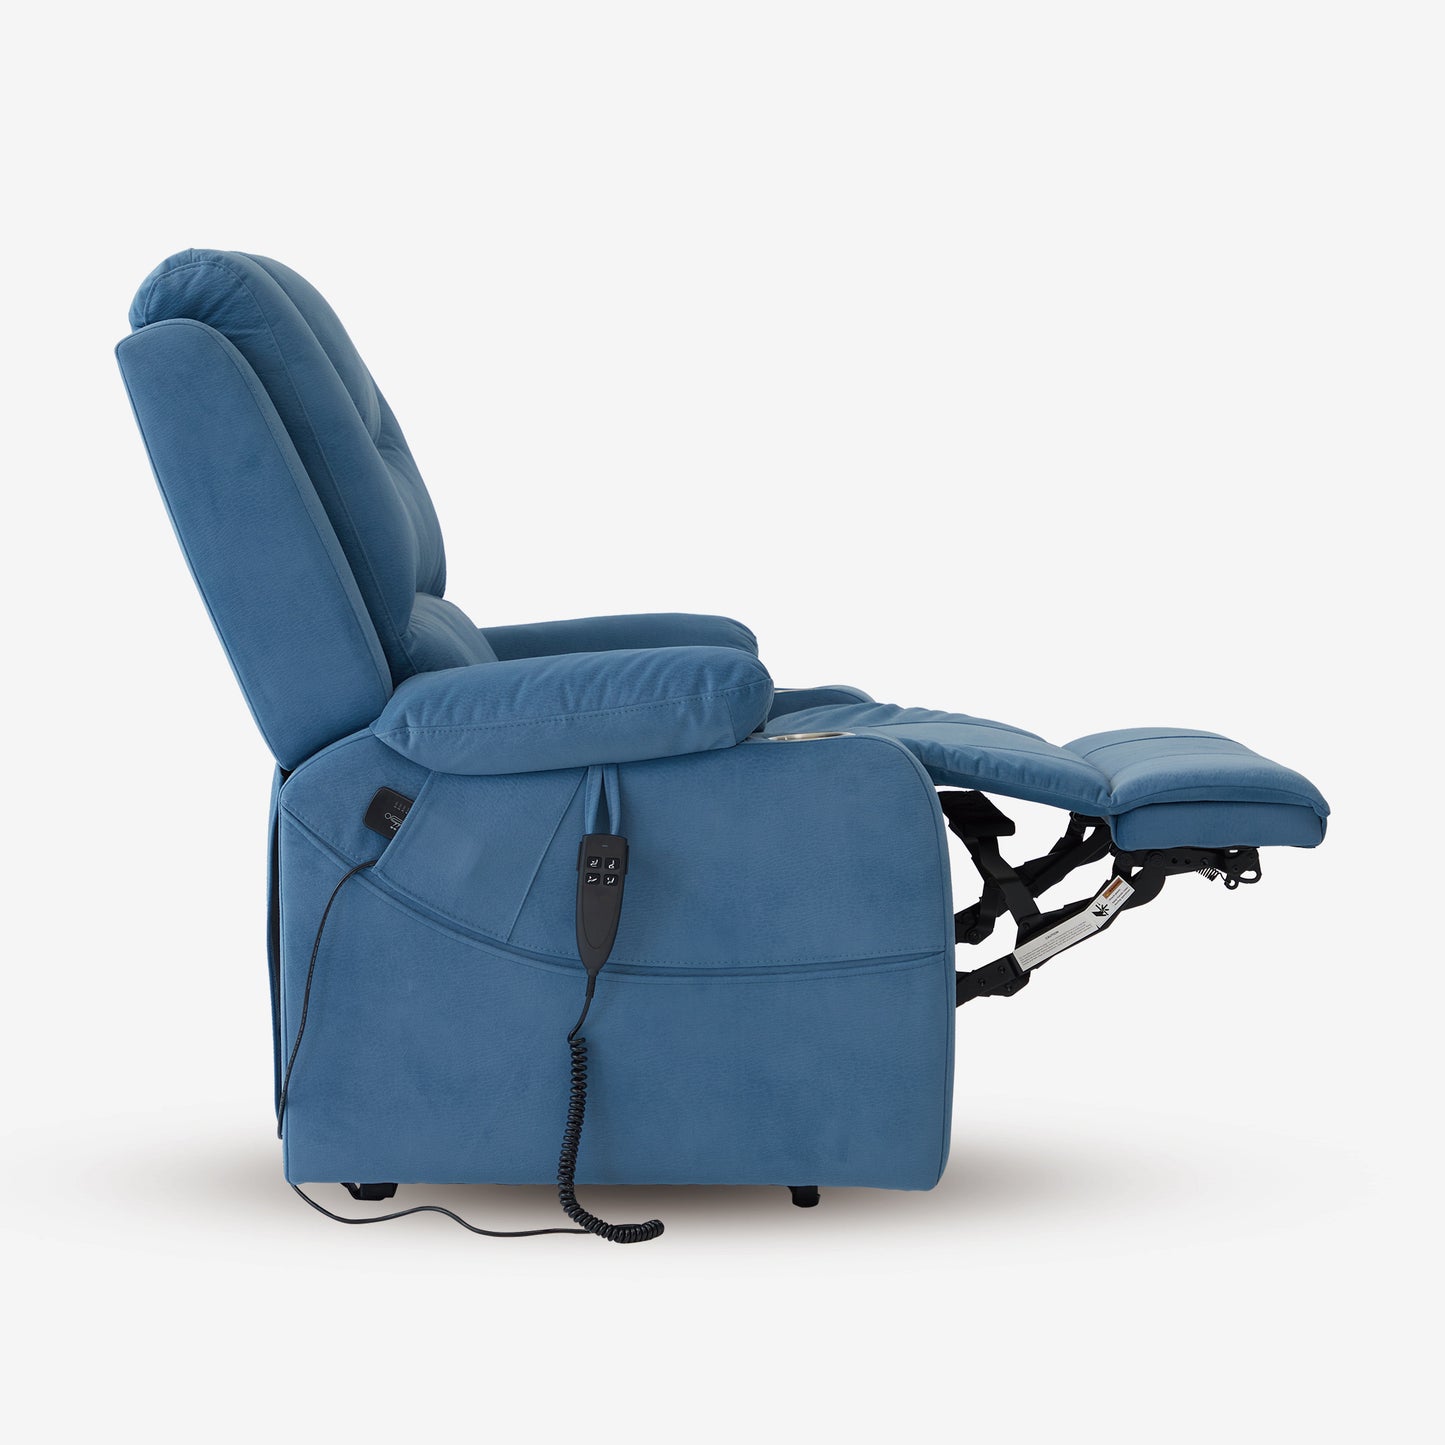 Blue Power Lift Recliner - Full Lay Flat Cup Holder Heating & Massage